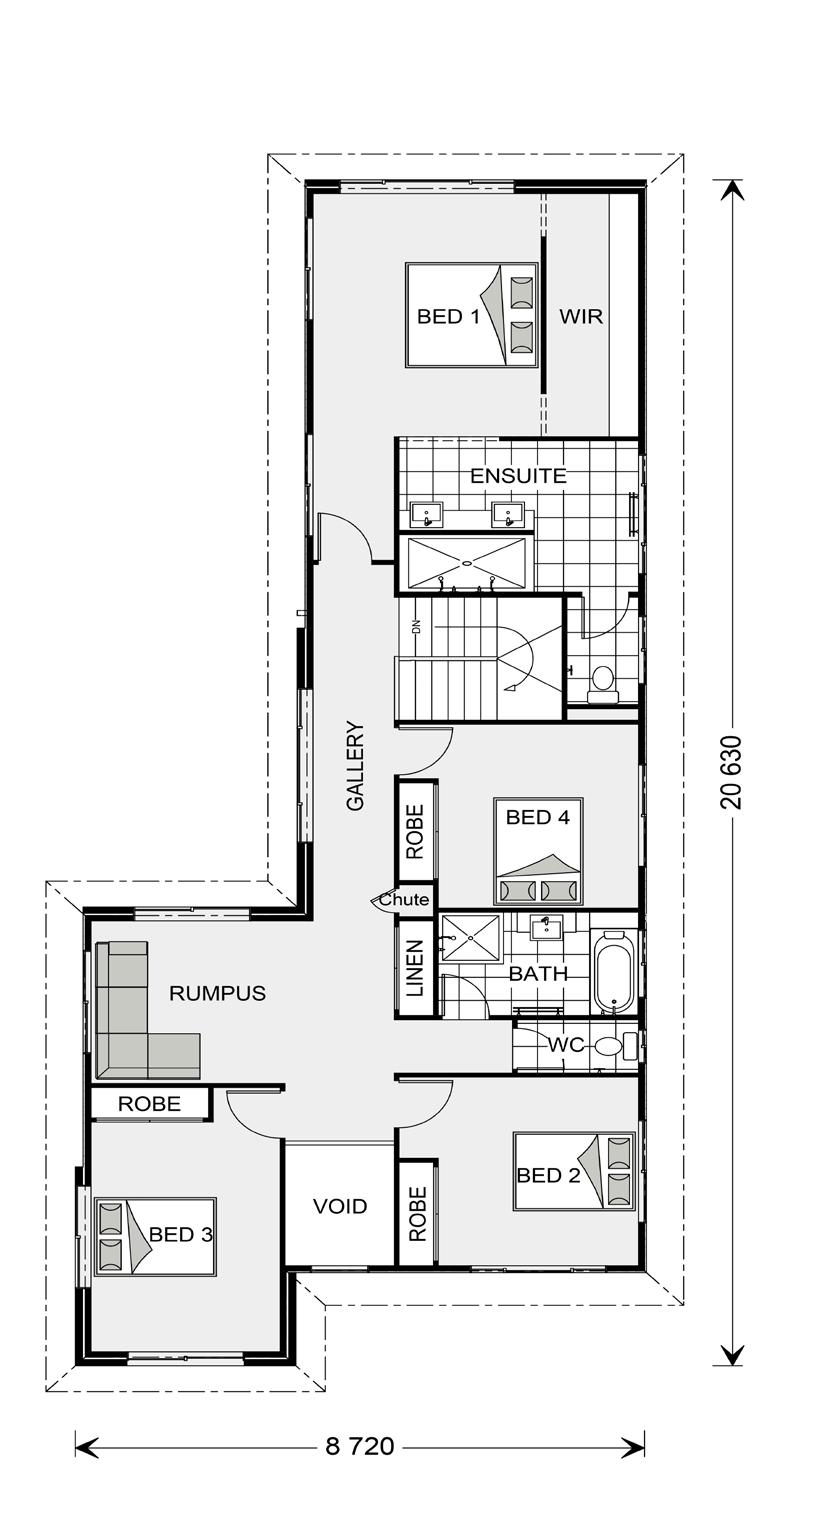 Lounge room + + Study + + Rumpus room + + Alfresco + + Double garage UPPER FLOOR SPECIFICATIONS GF Living: 127.3 sq.m 13.8 sq UF Living: 123.